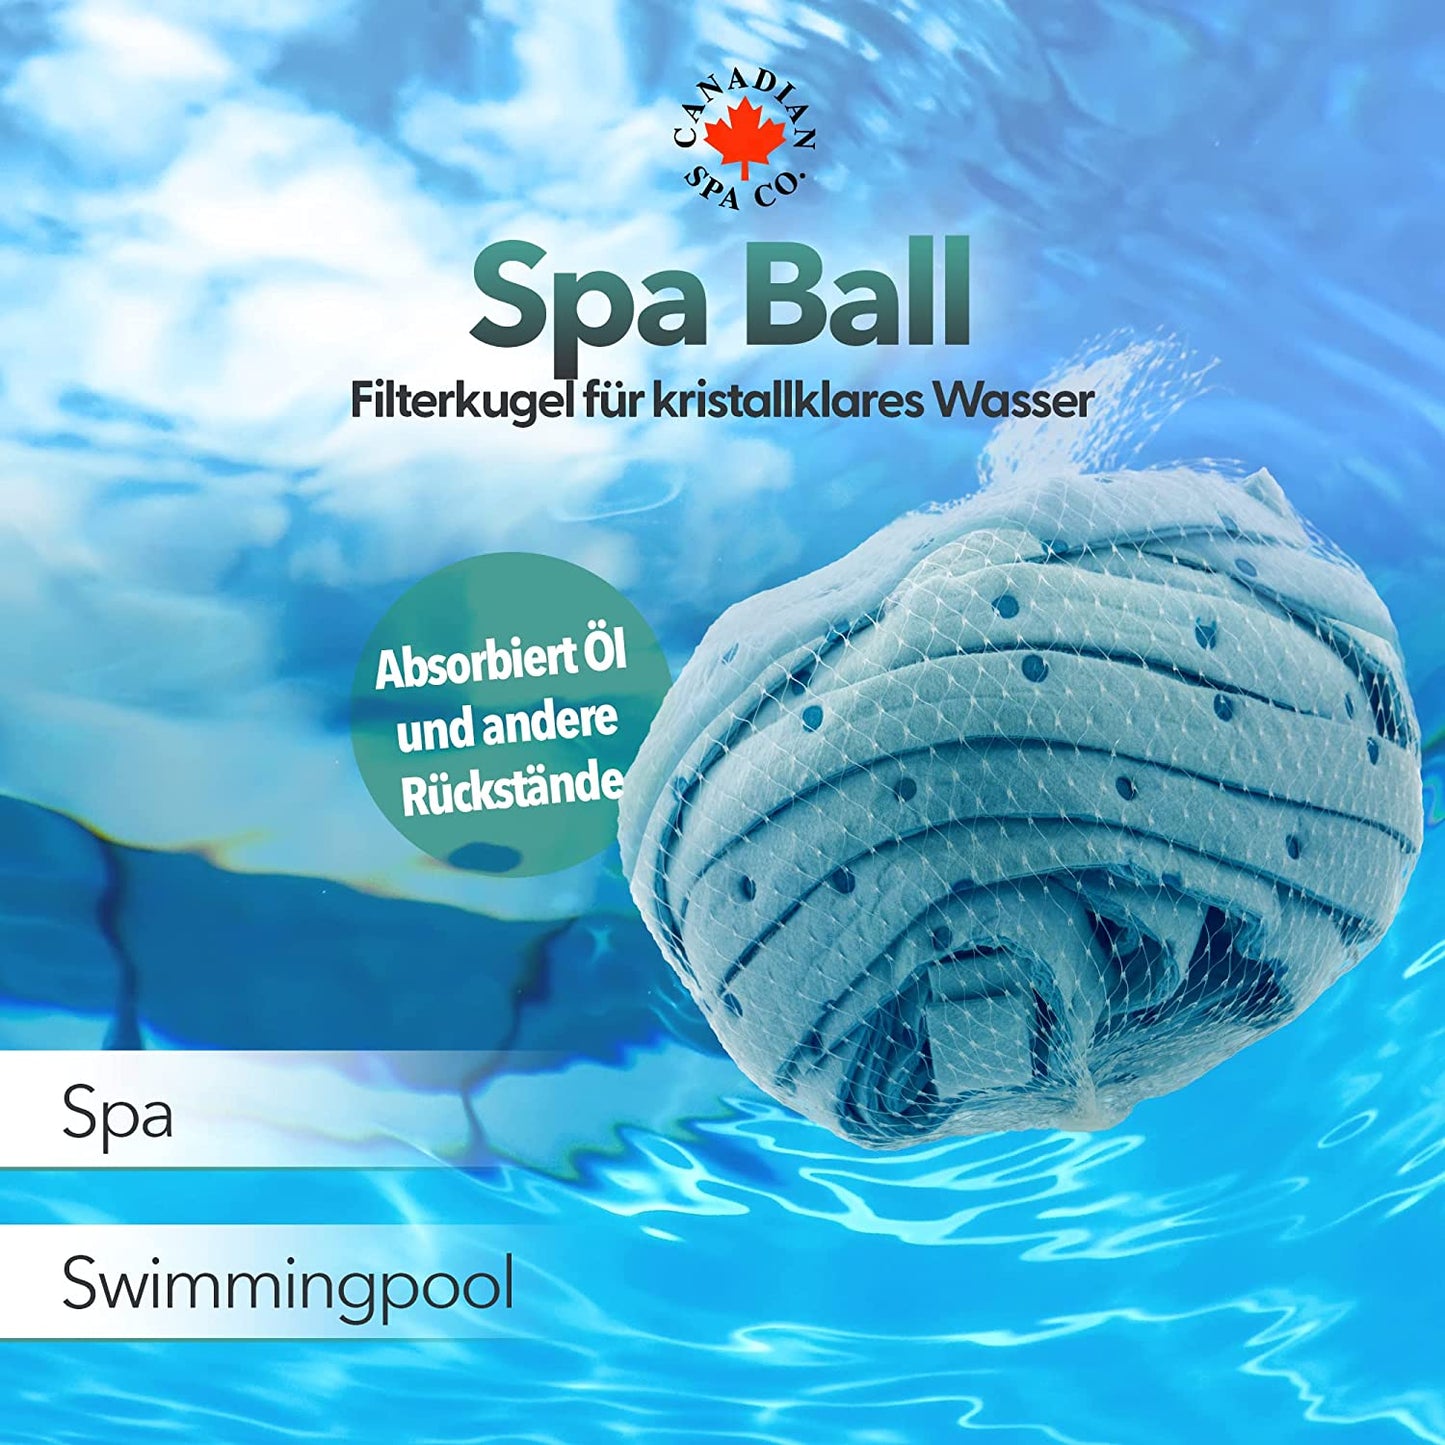 Whirlpool-Ball / Spa Ball / Pad